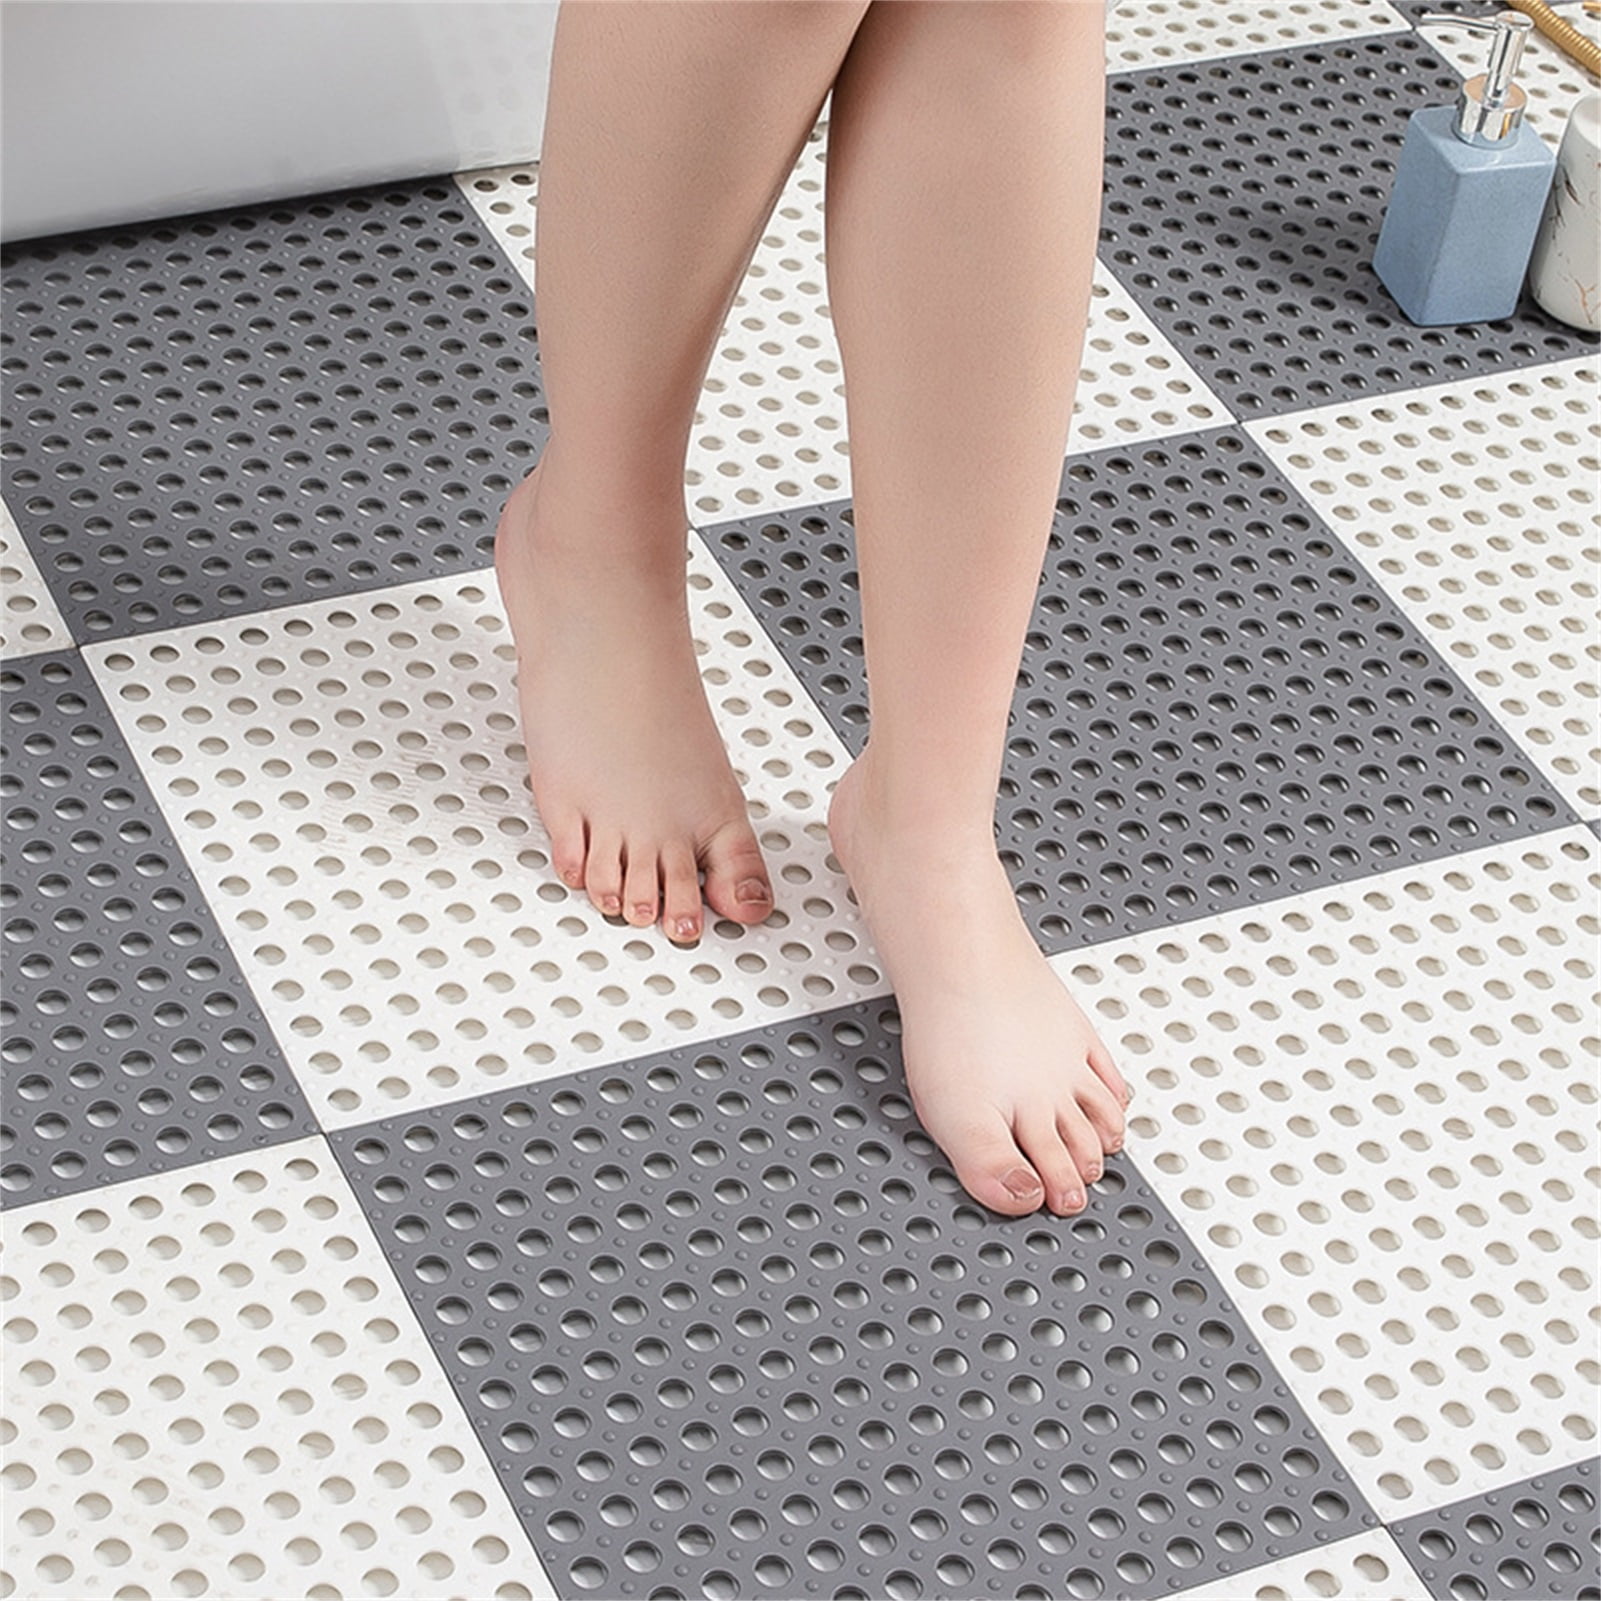 Pjtewawe Carpet Square Shower Mat Extra Large Non Slip Mat For Elderly &  Kids Bathroom Drain Holes Strong Suction Cups